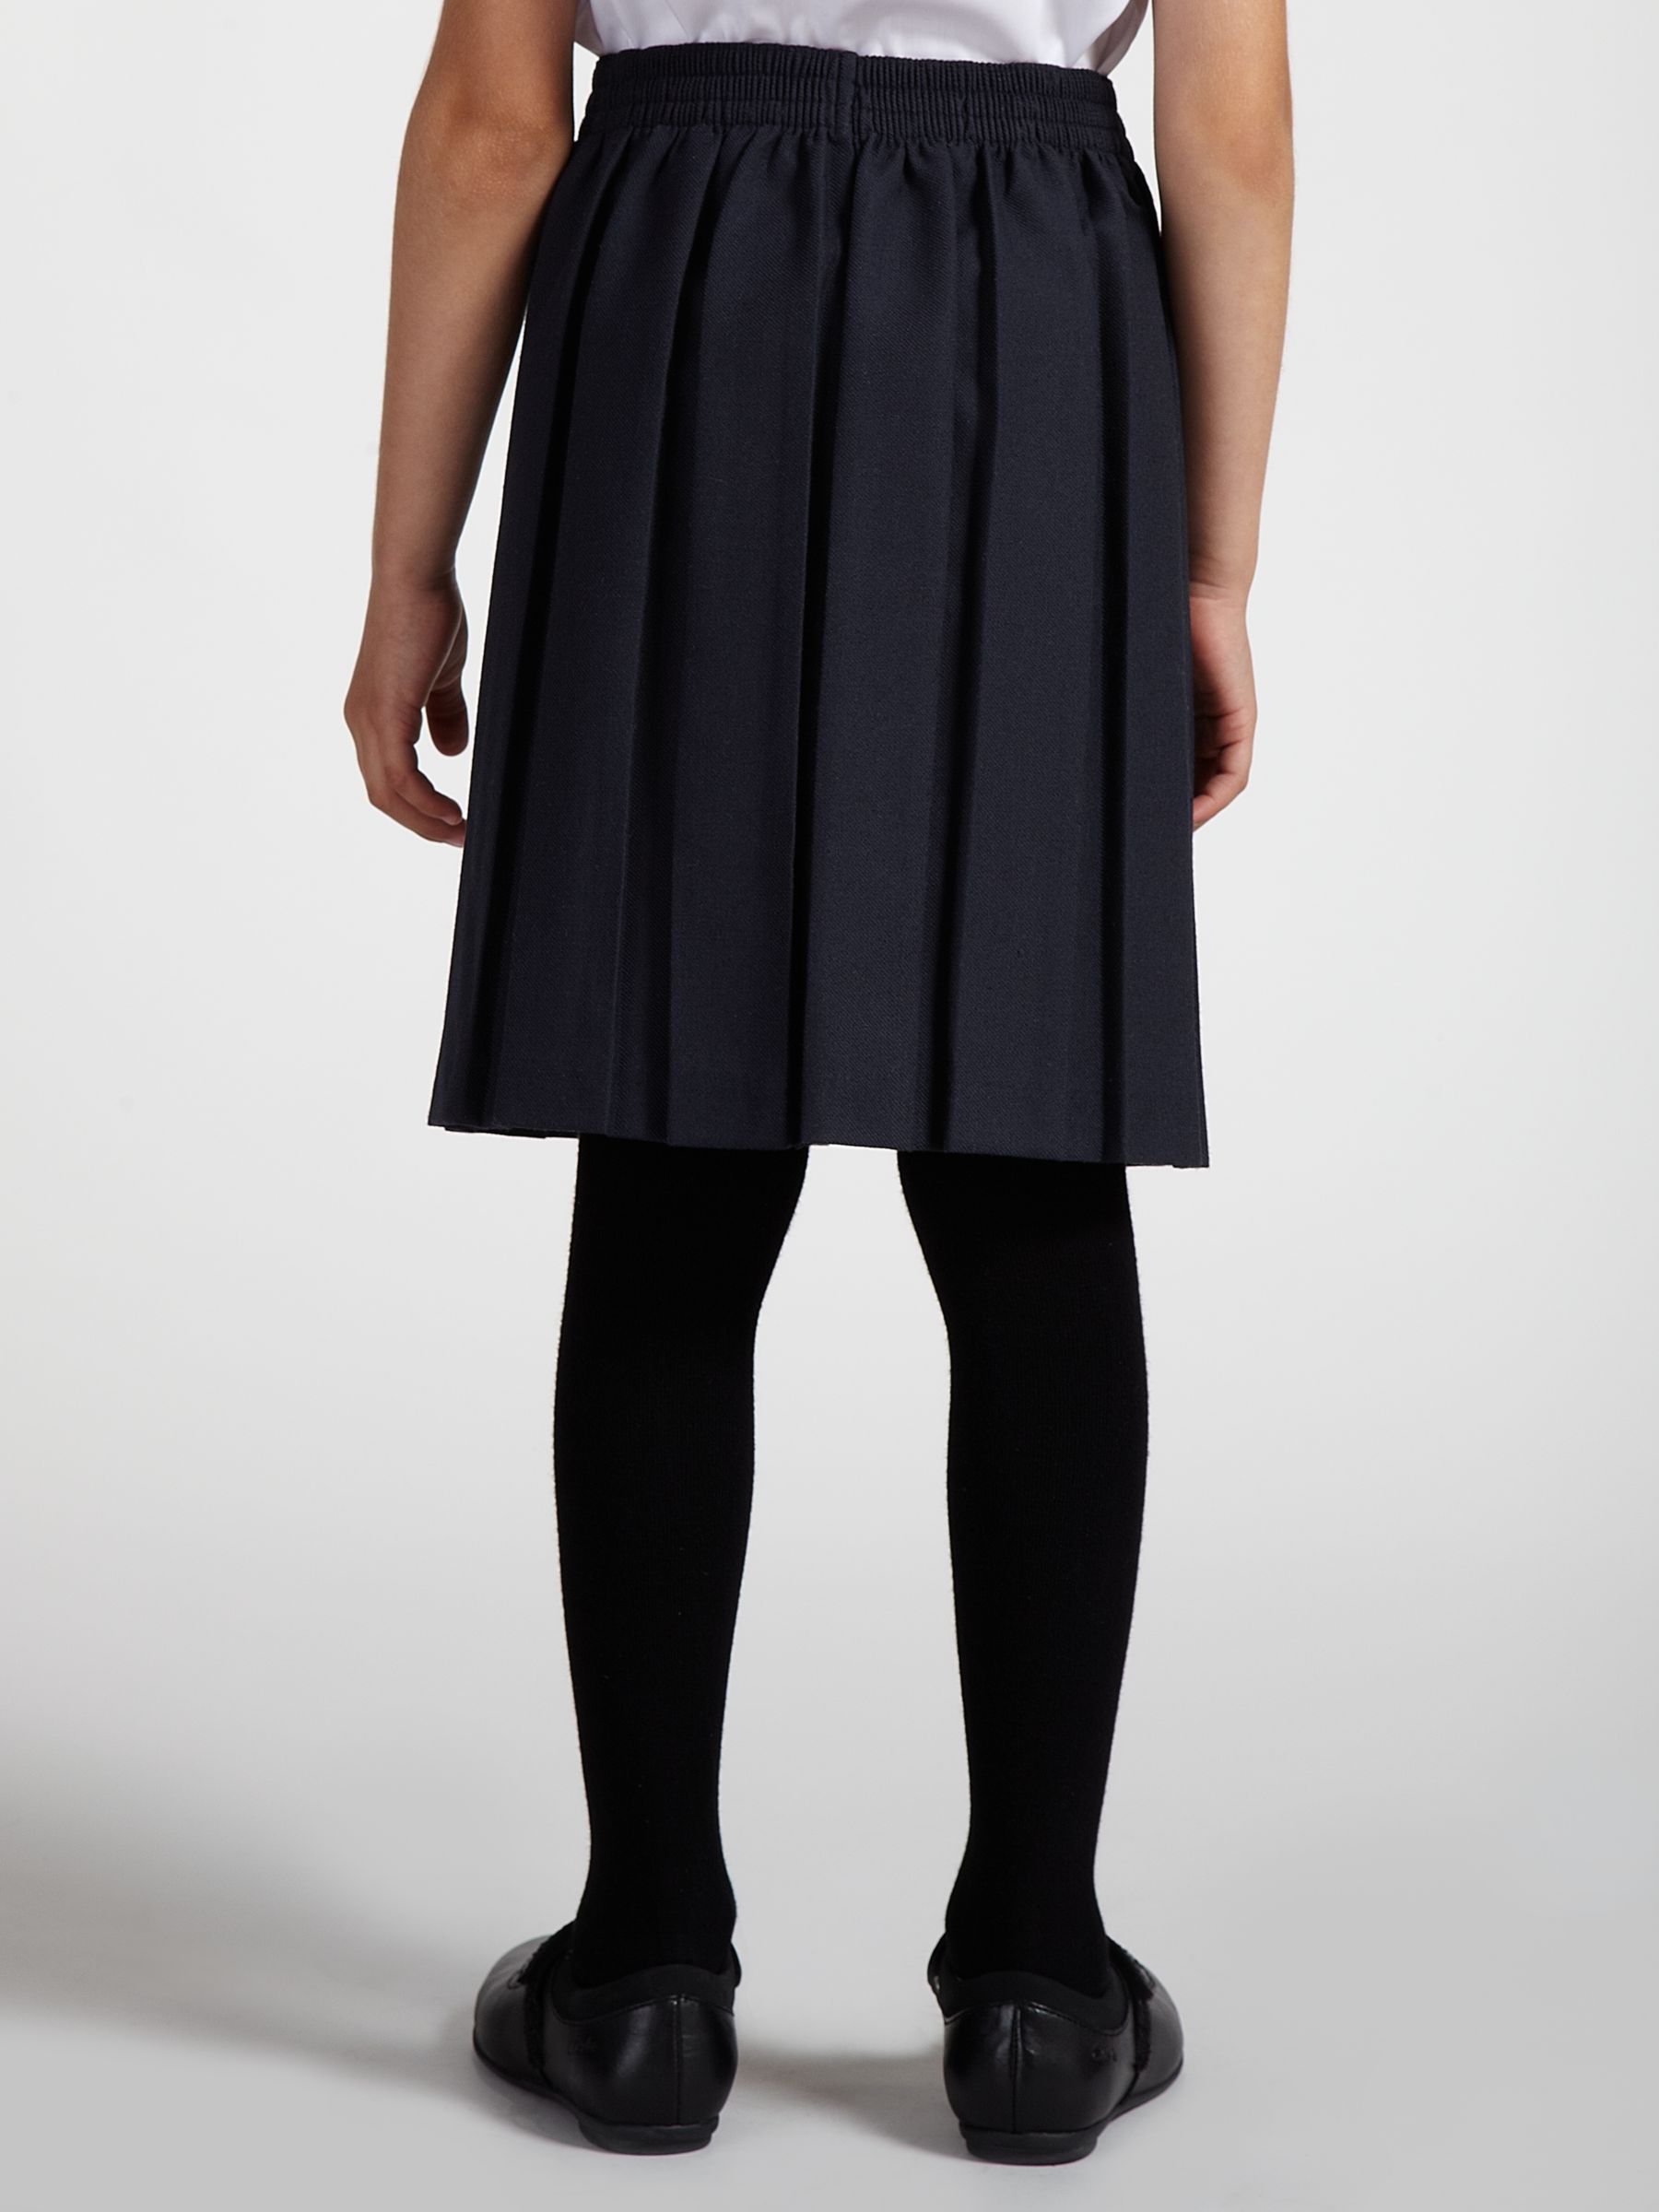 John Lewis Girls' Pleated School Skirt, Navy at John Lewis